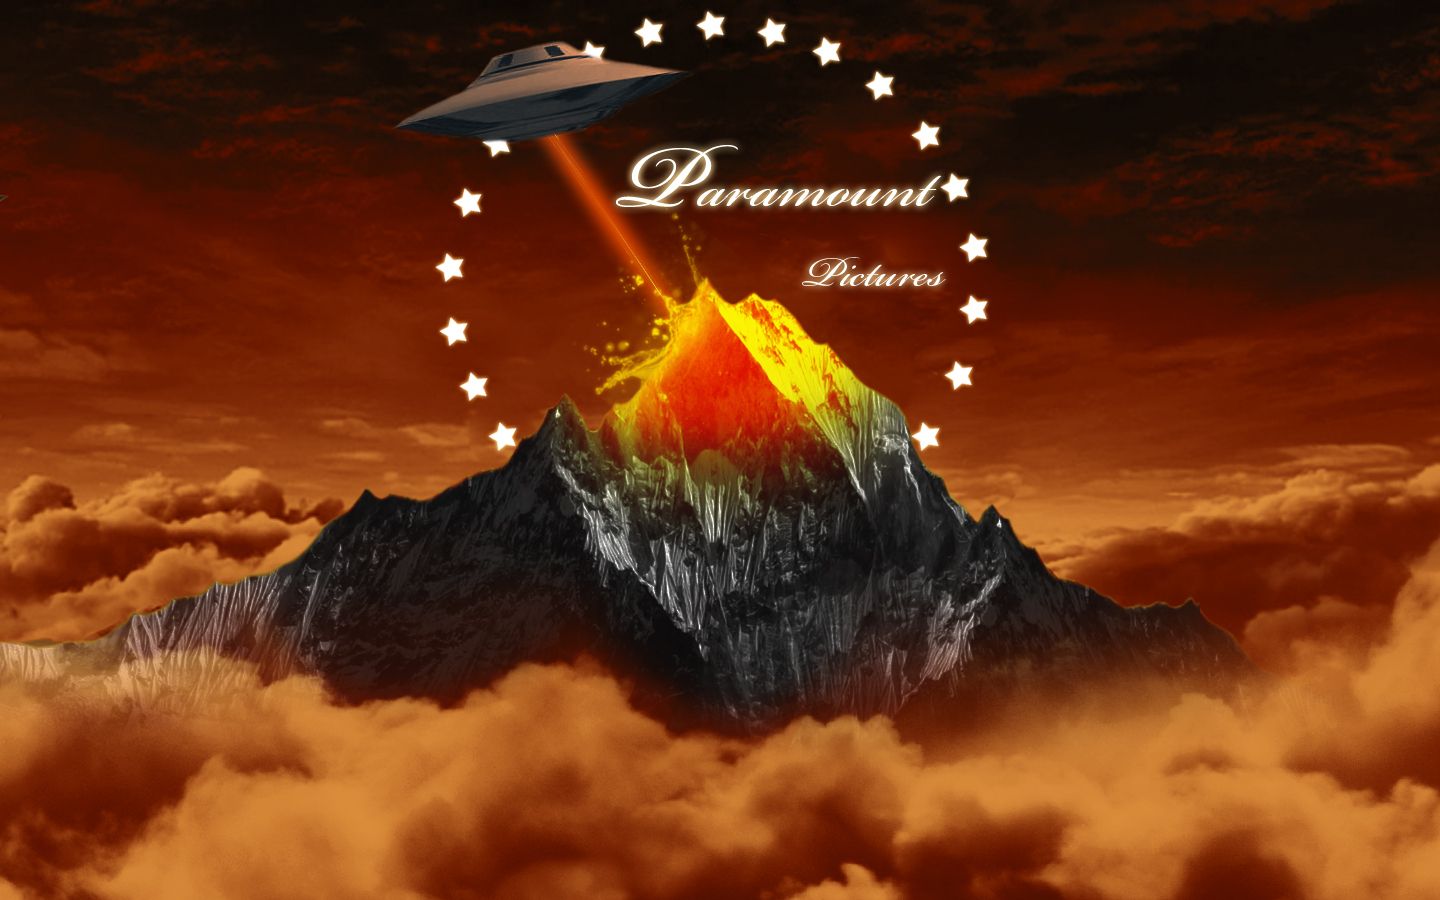 Paramount Background. Paramount Studios Wallpaper, CBS Paramount HD Wallpaper and Paramount Background